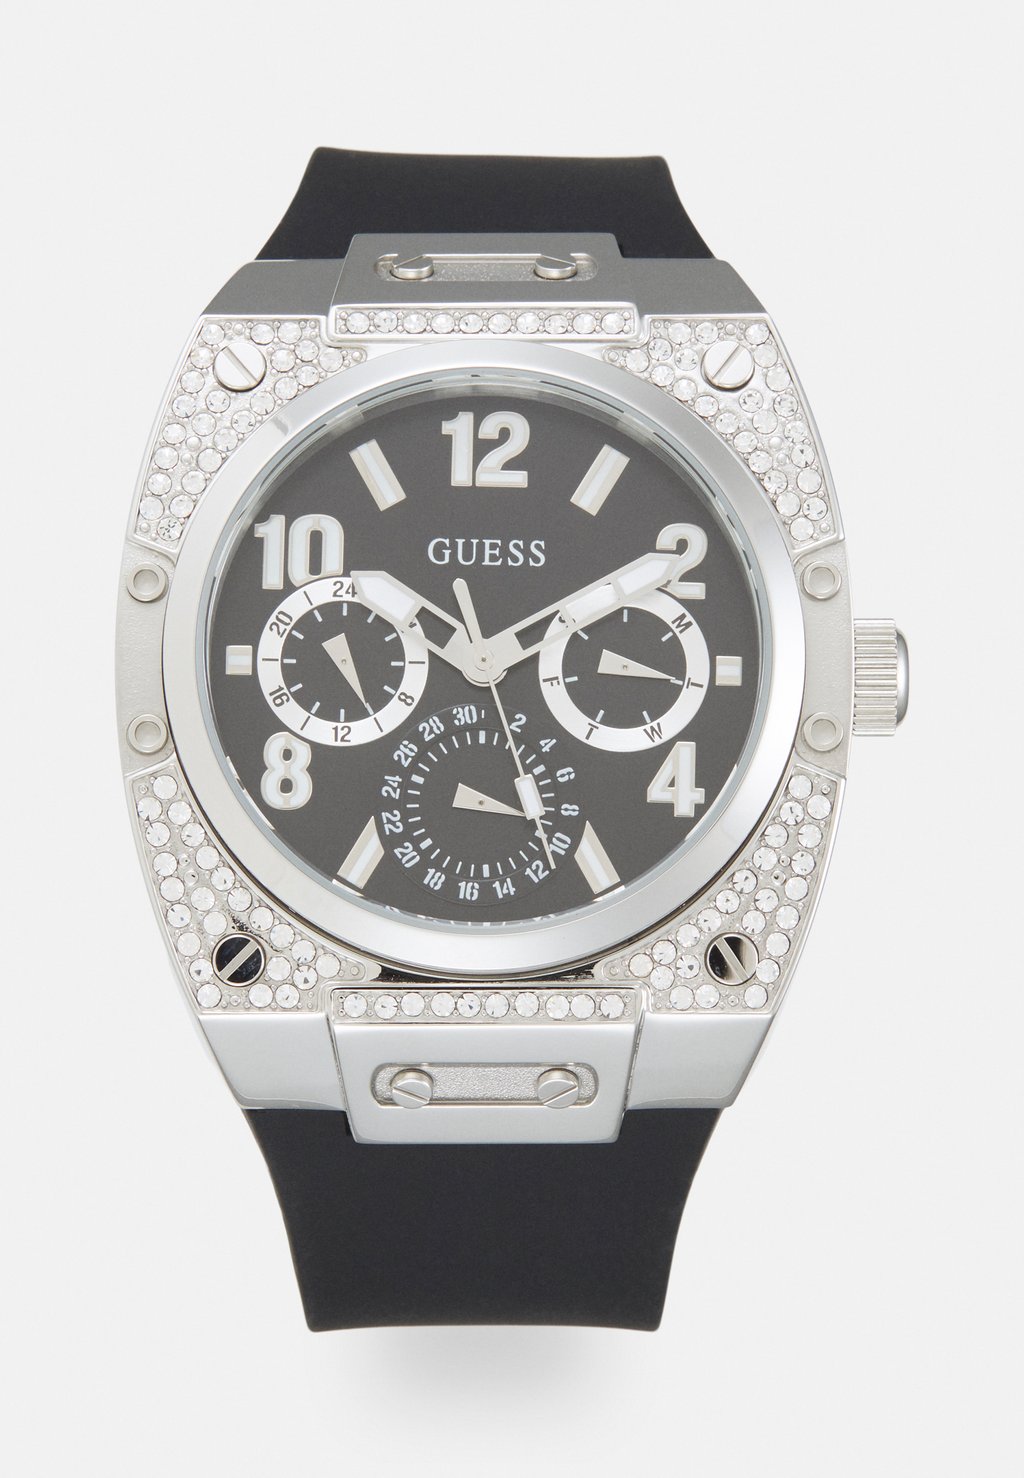 Часы Prodigy Exclusive Guess, цвет silver-coloured/black часы prodigy exclusive guess цвет silver coloured black